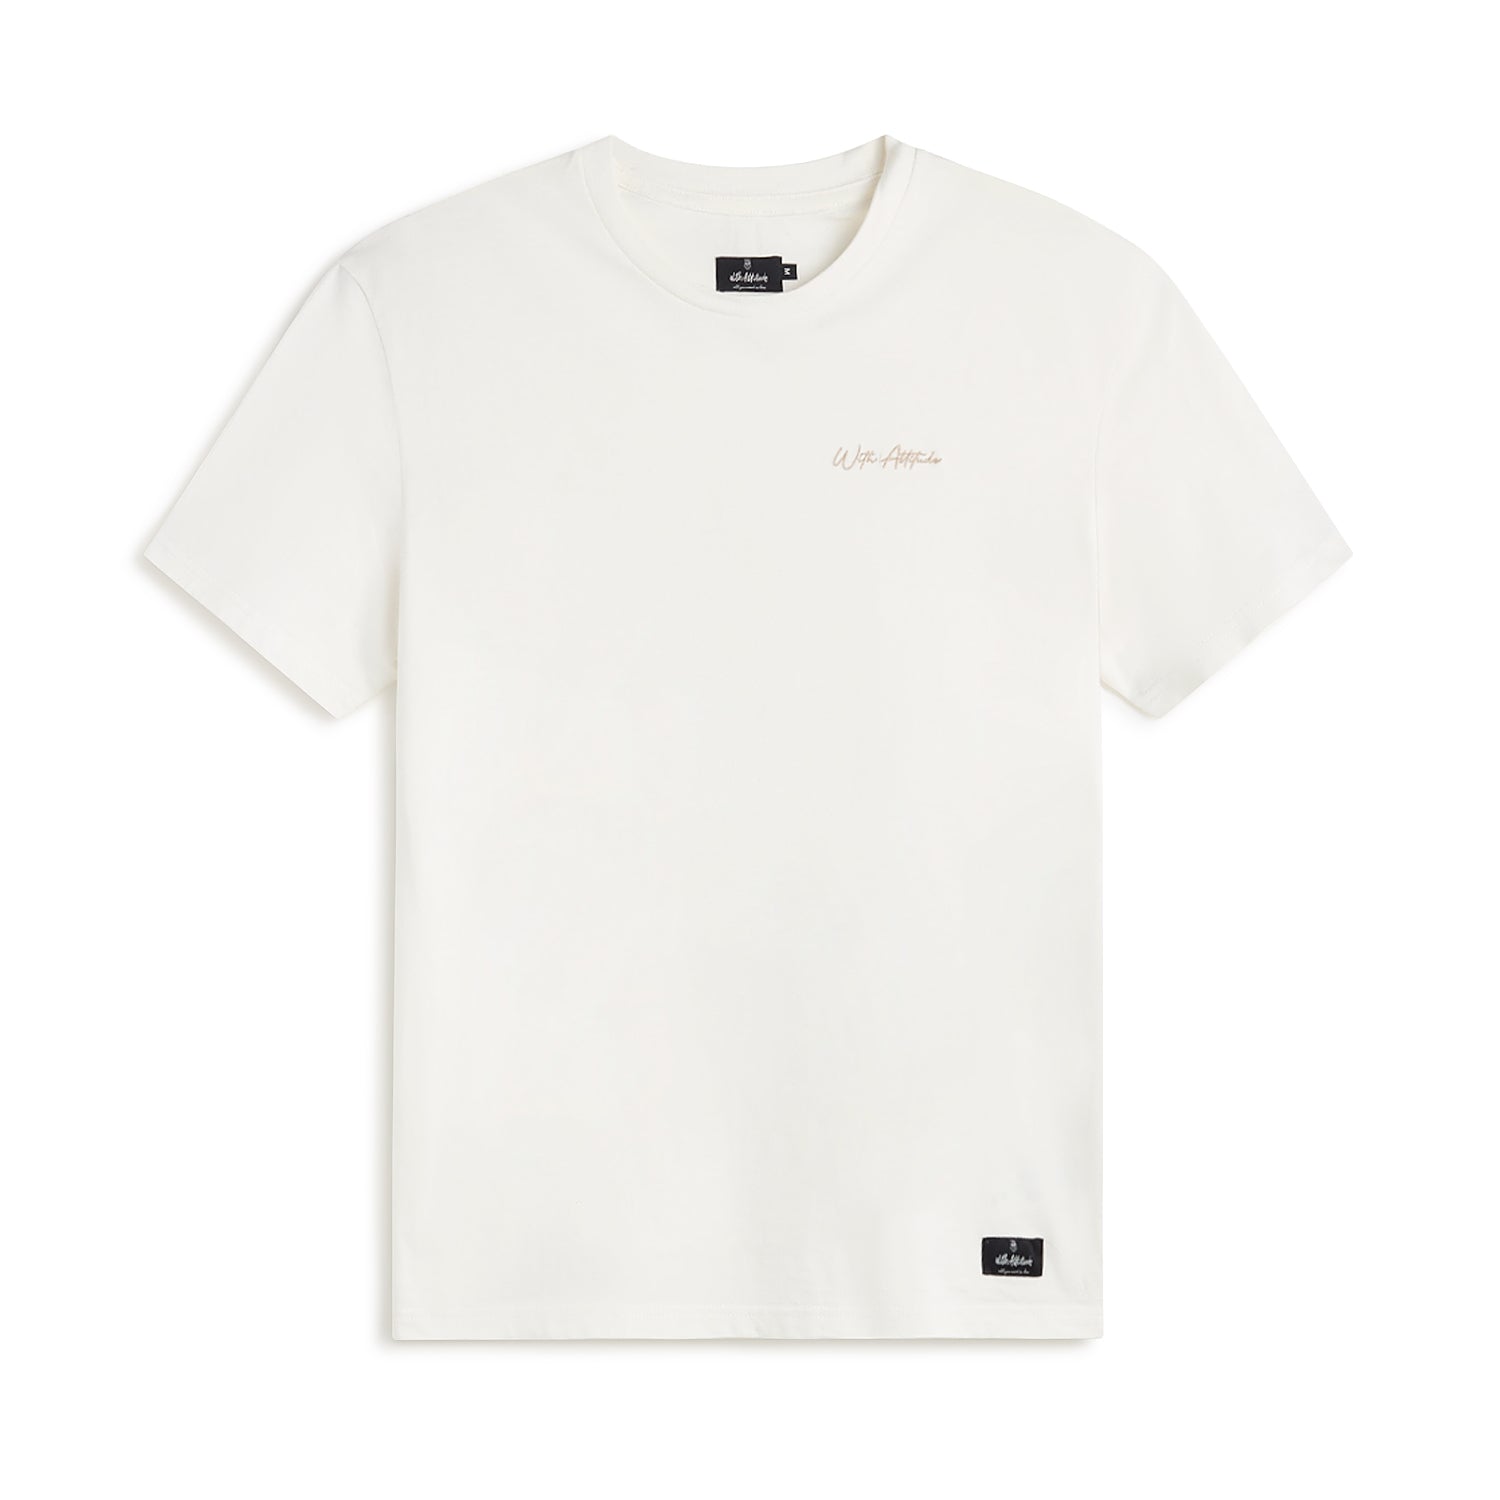 Camiseta MINIMAL Off white